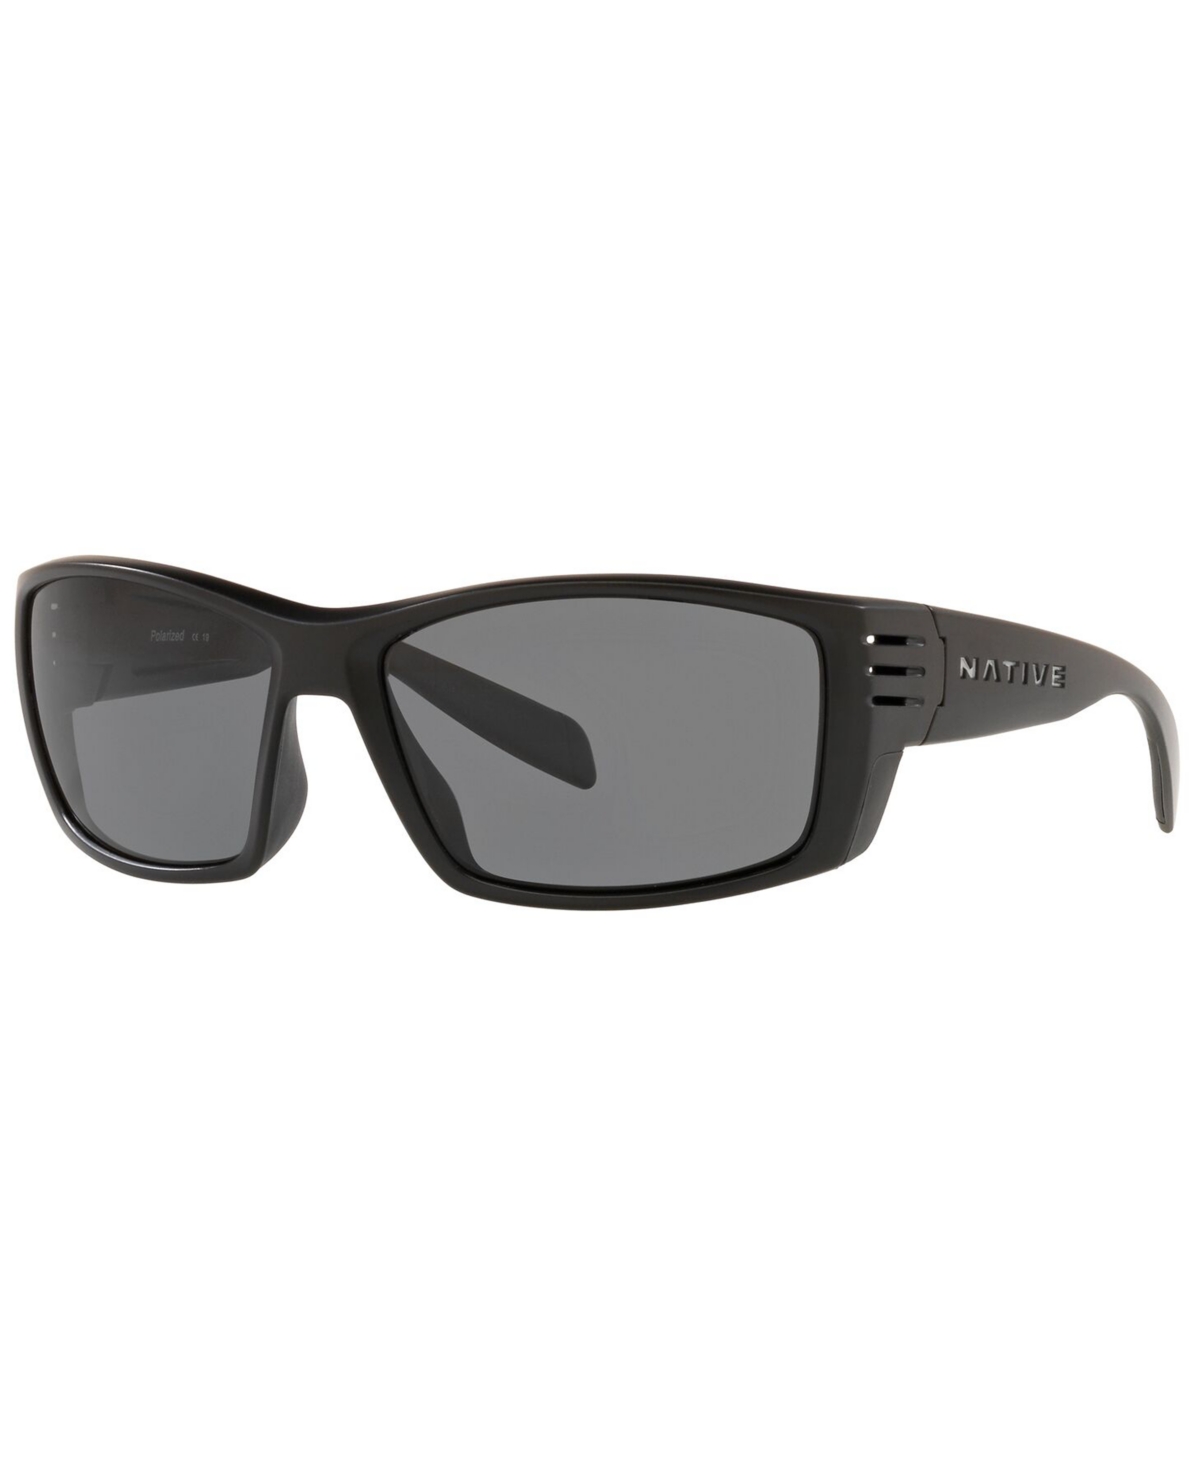 Native Men's Polarized Sunglasses, XD9019 - MATTE BLACK /GREY